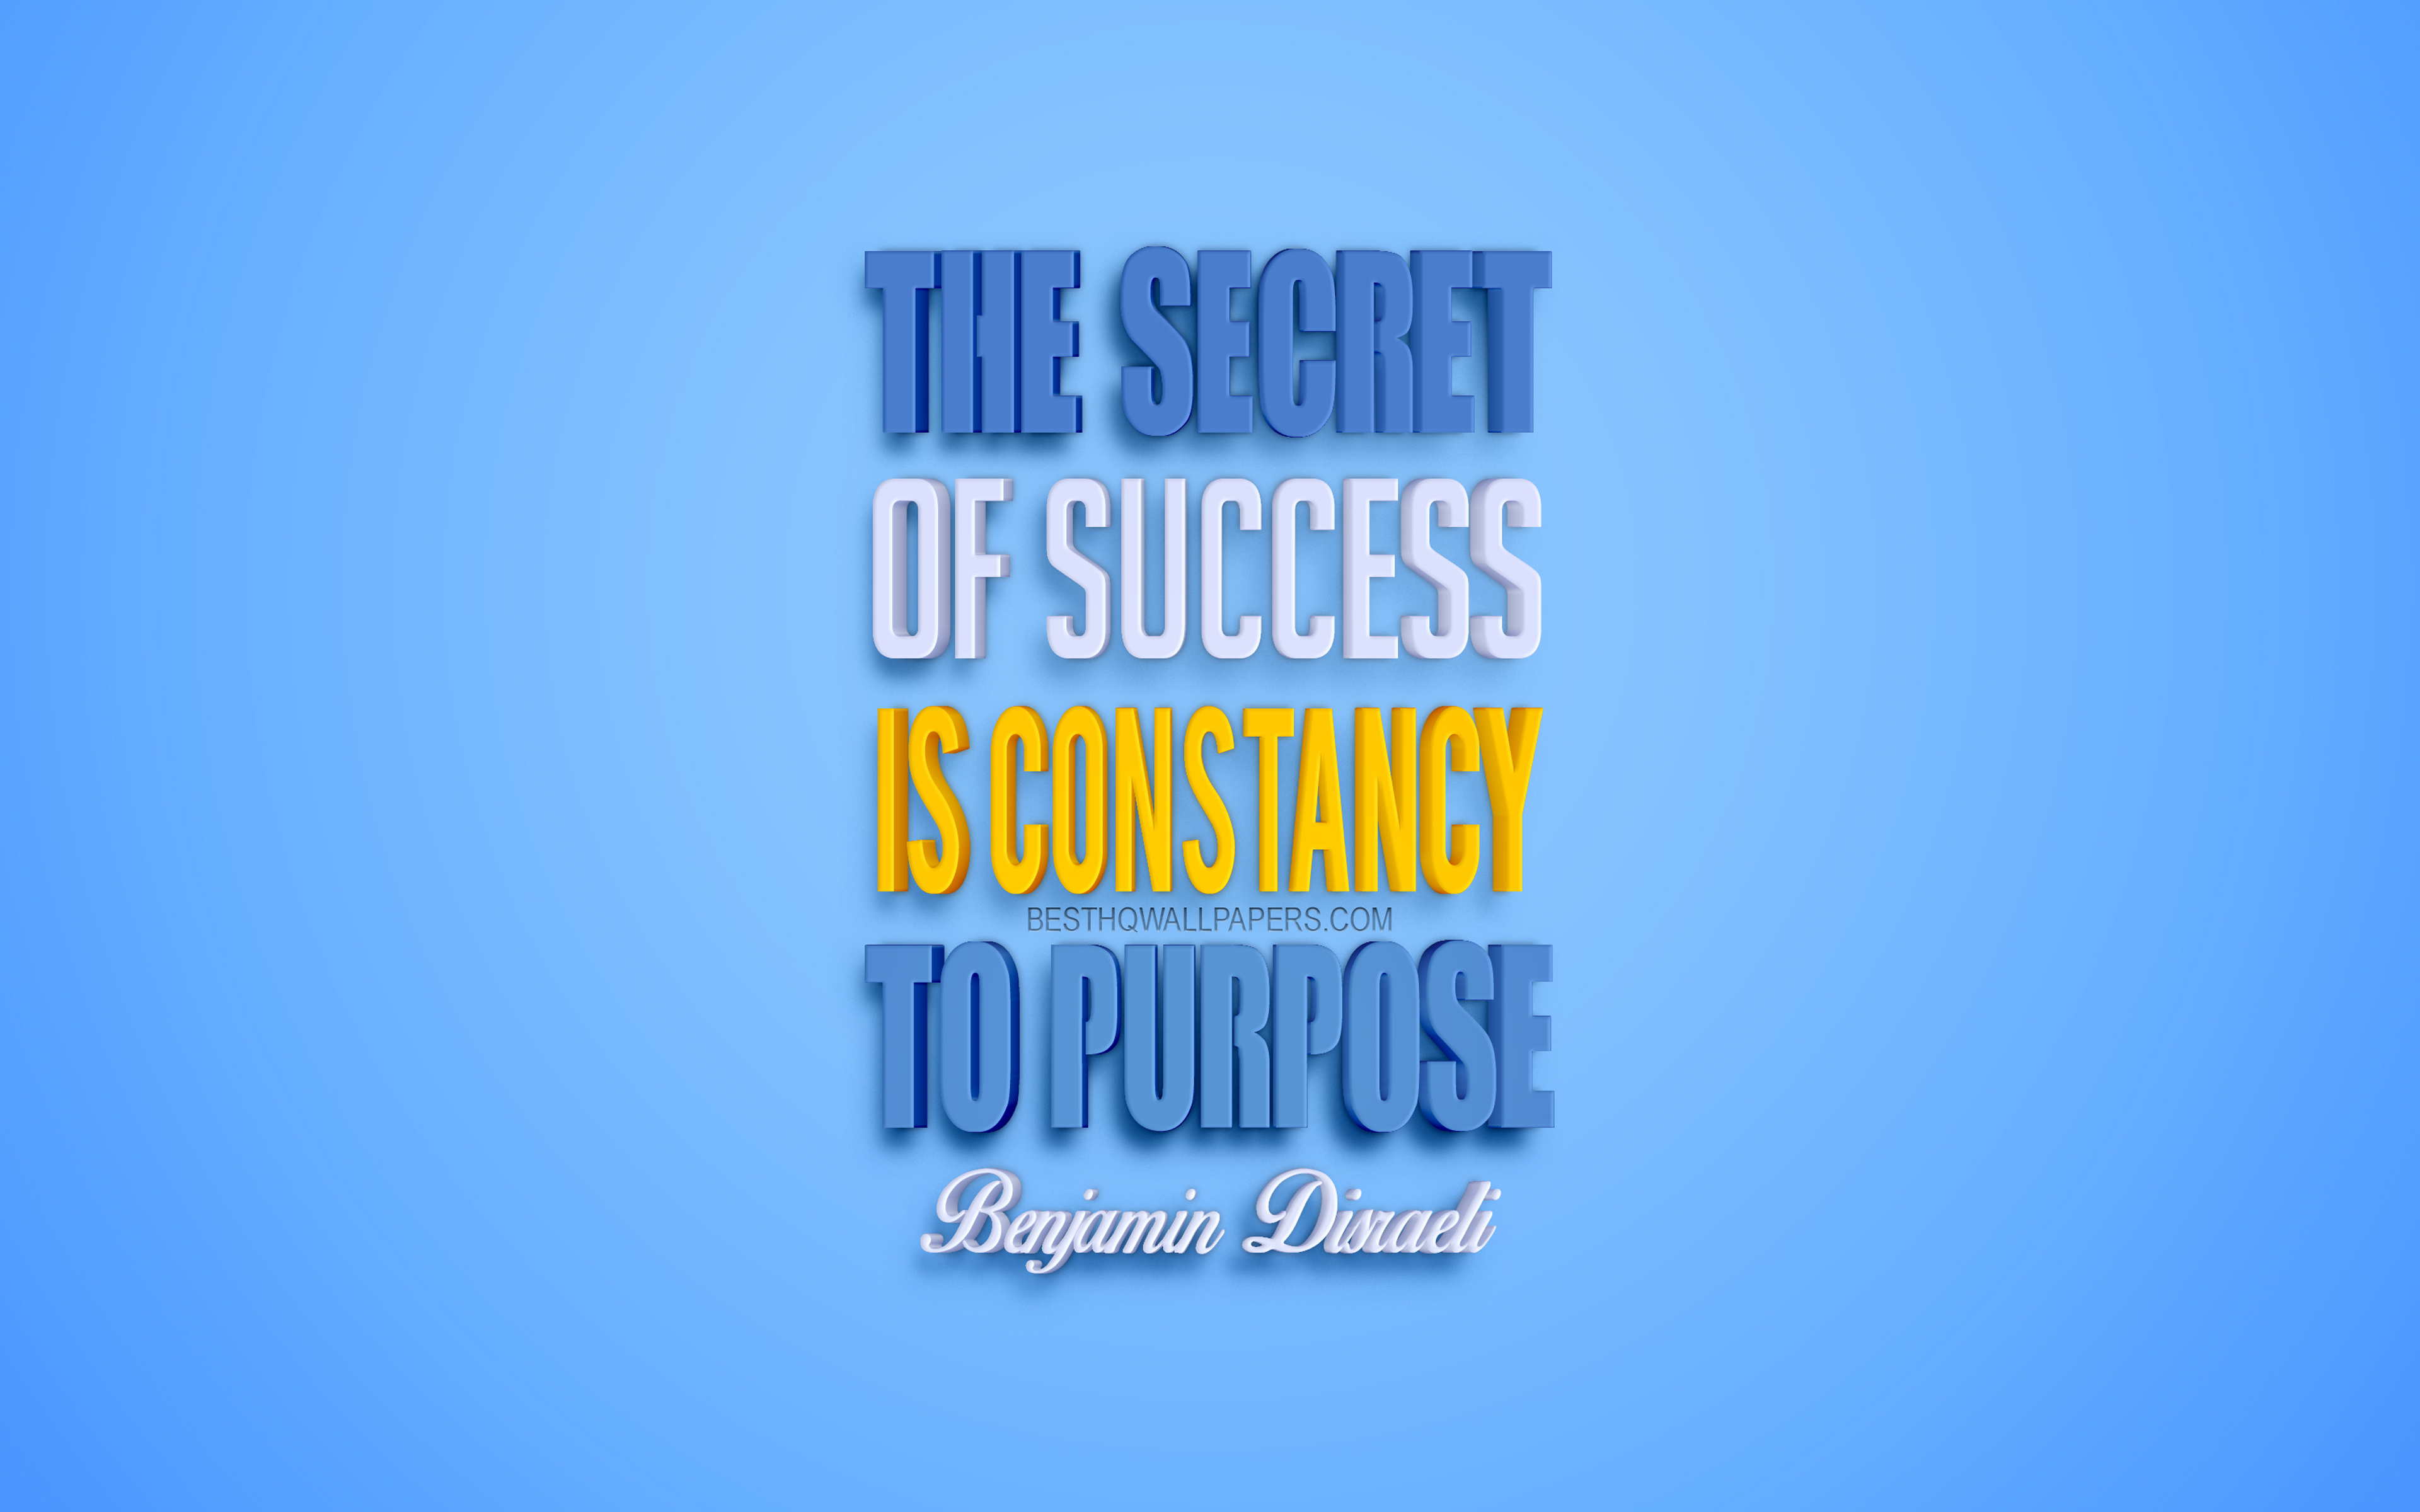 Download wallpaper The secret of success is constancy to purpose